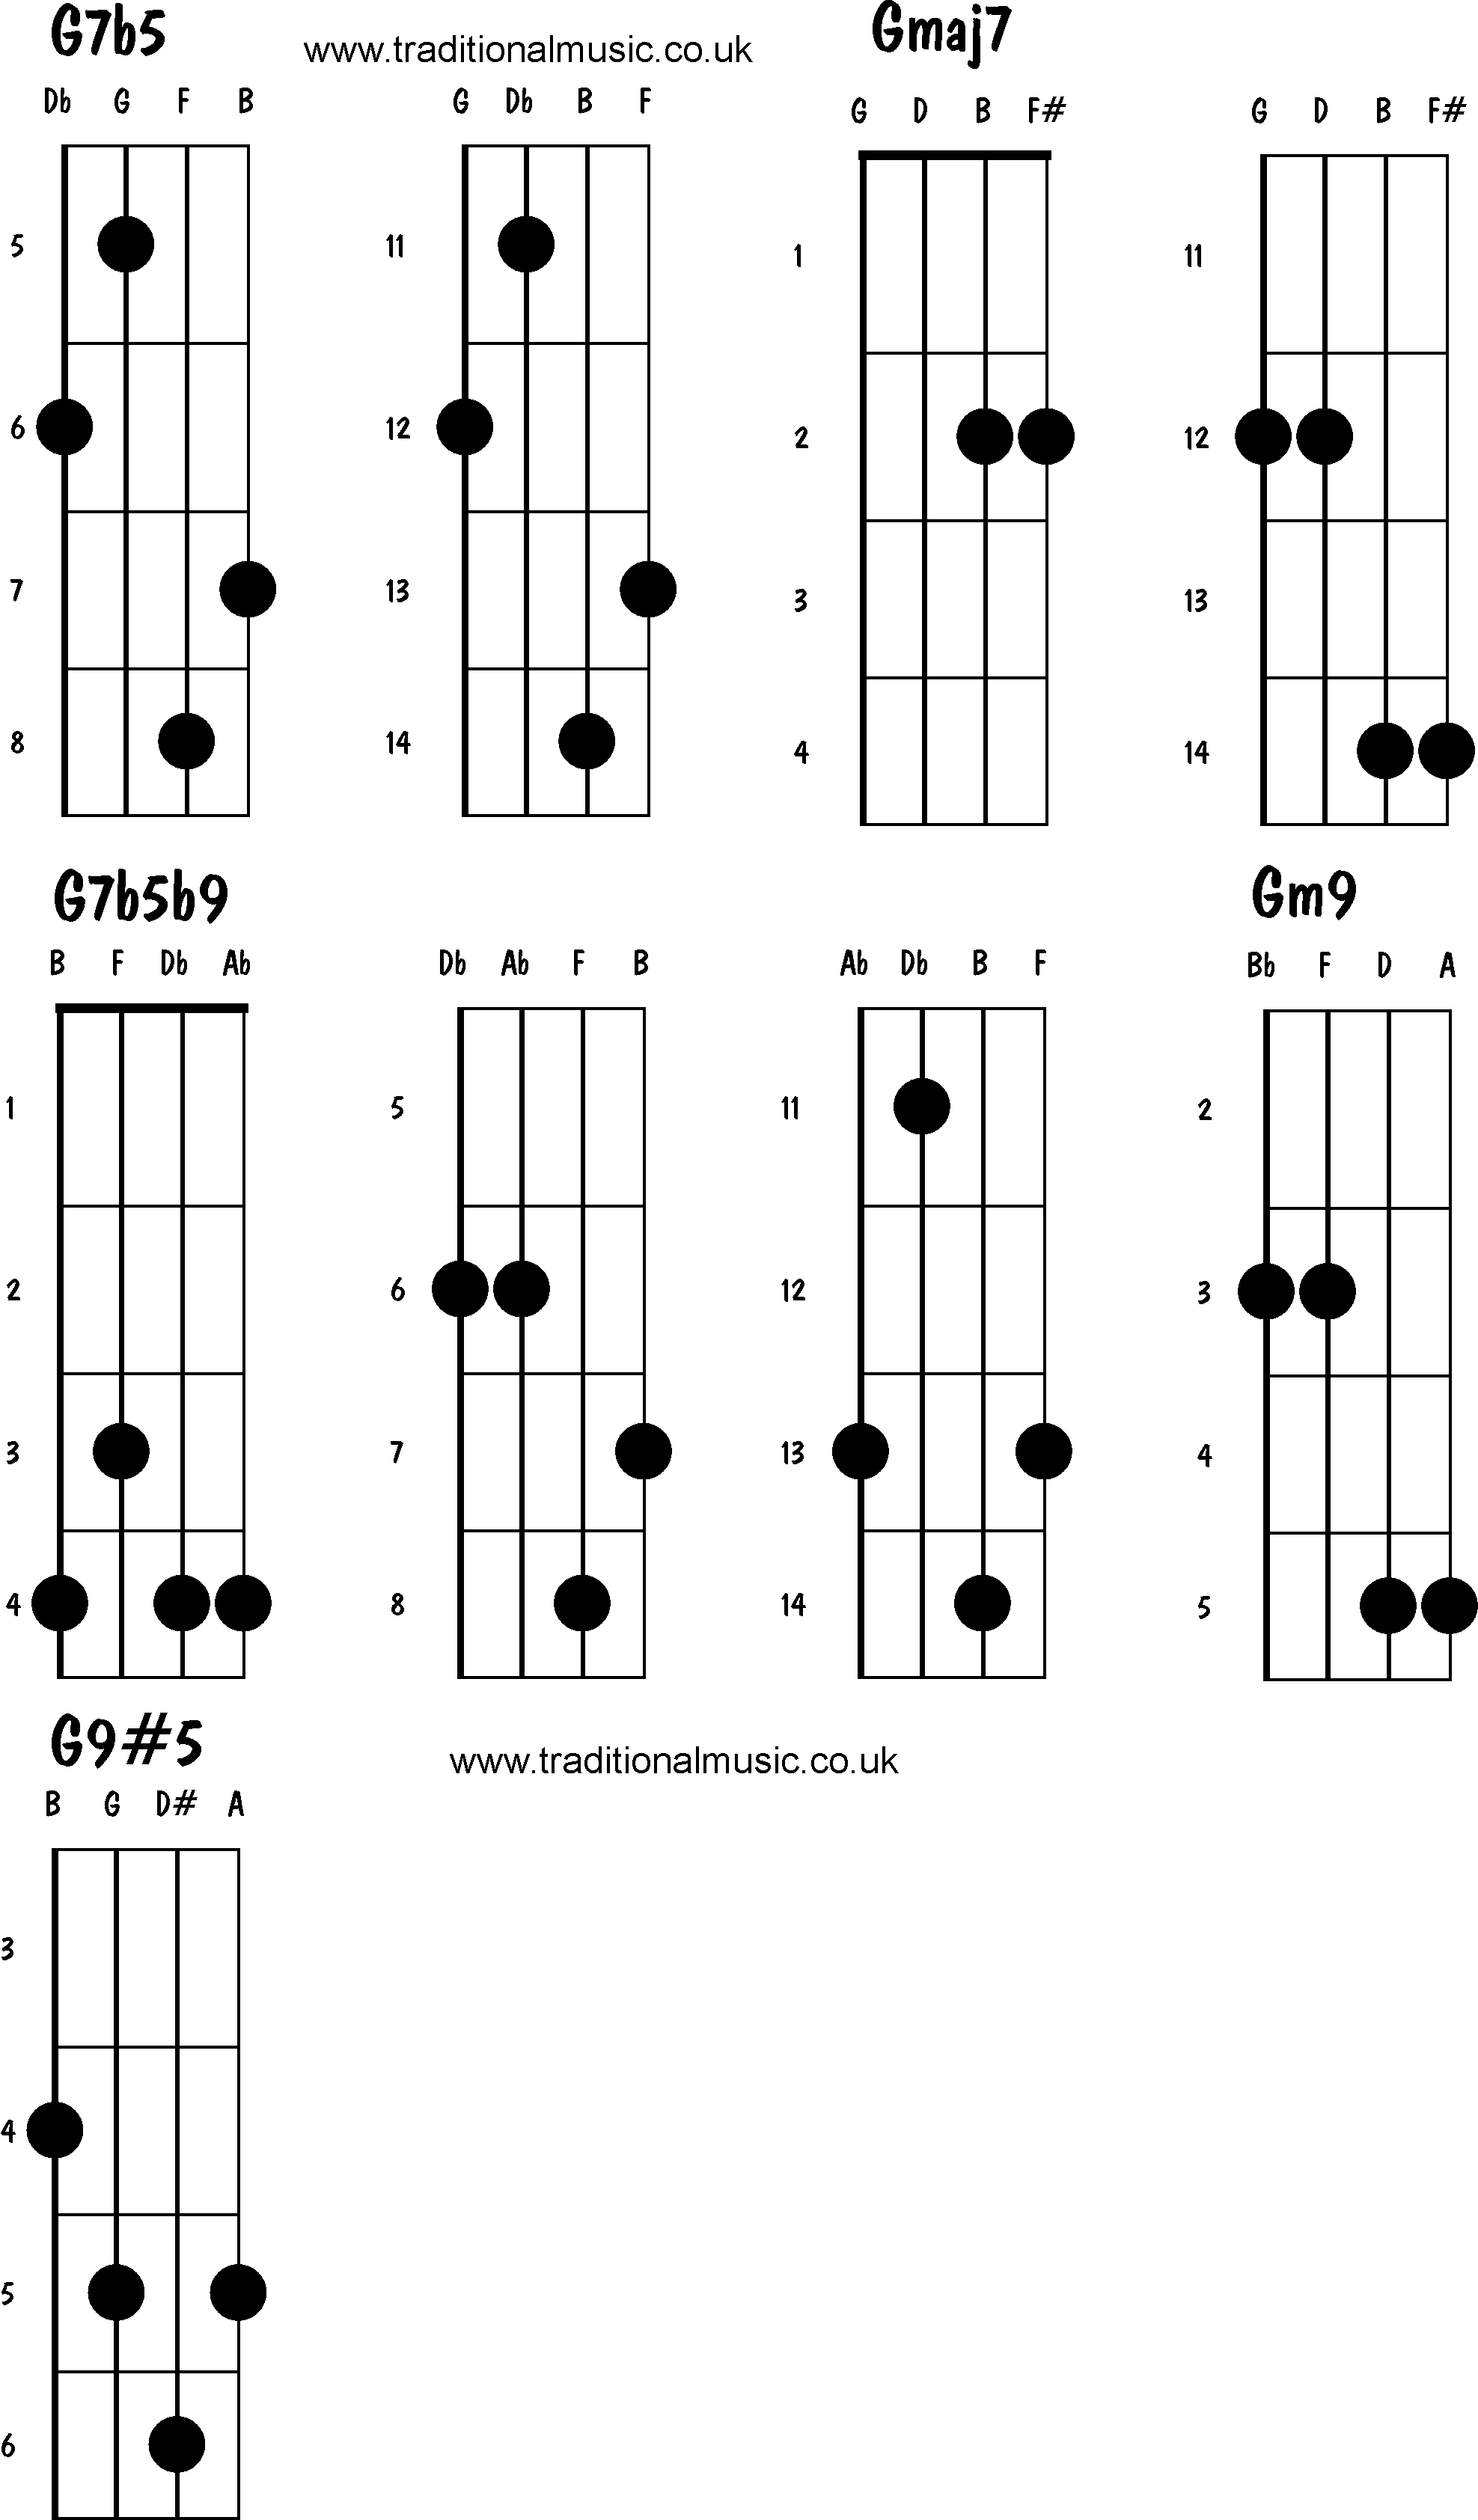 Advanced mandolin chords: G7b5, Gmaj7, G7b5b9, Gm9, G9#5